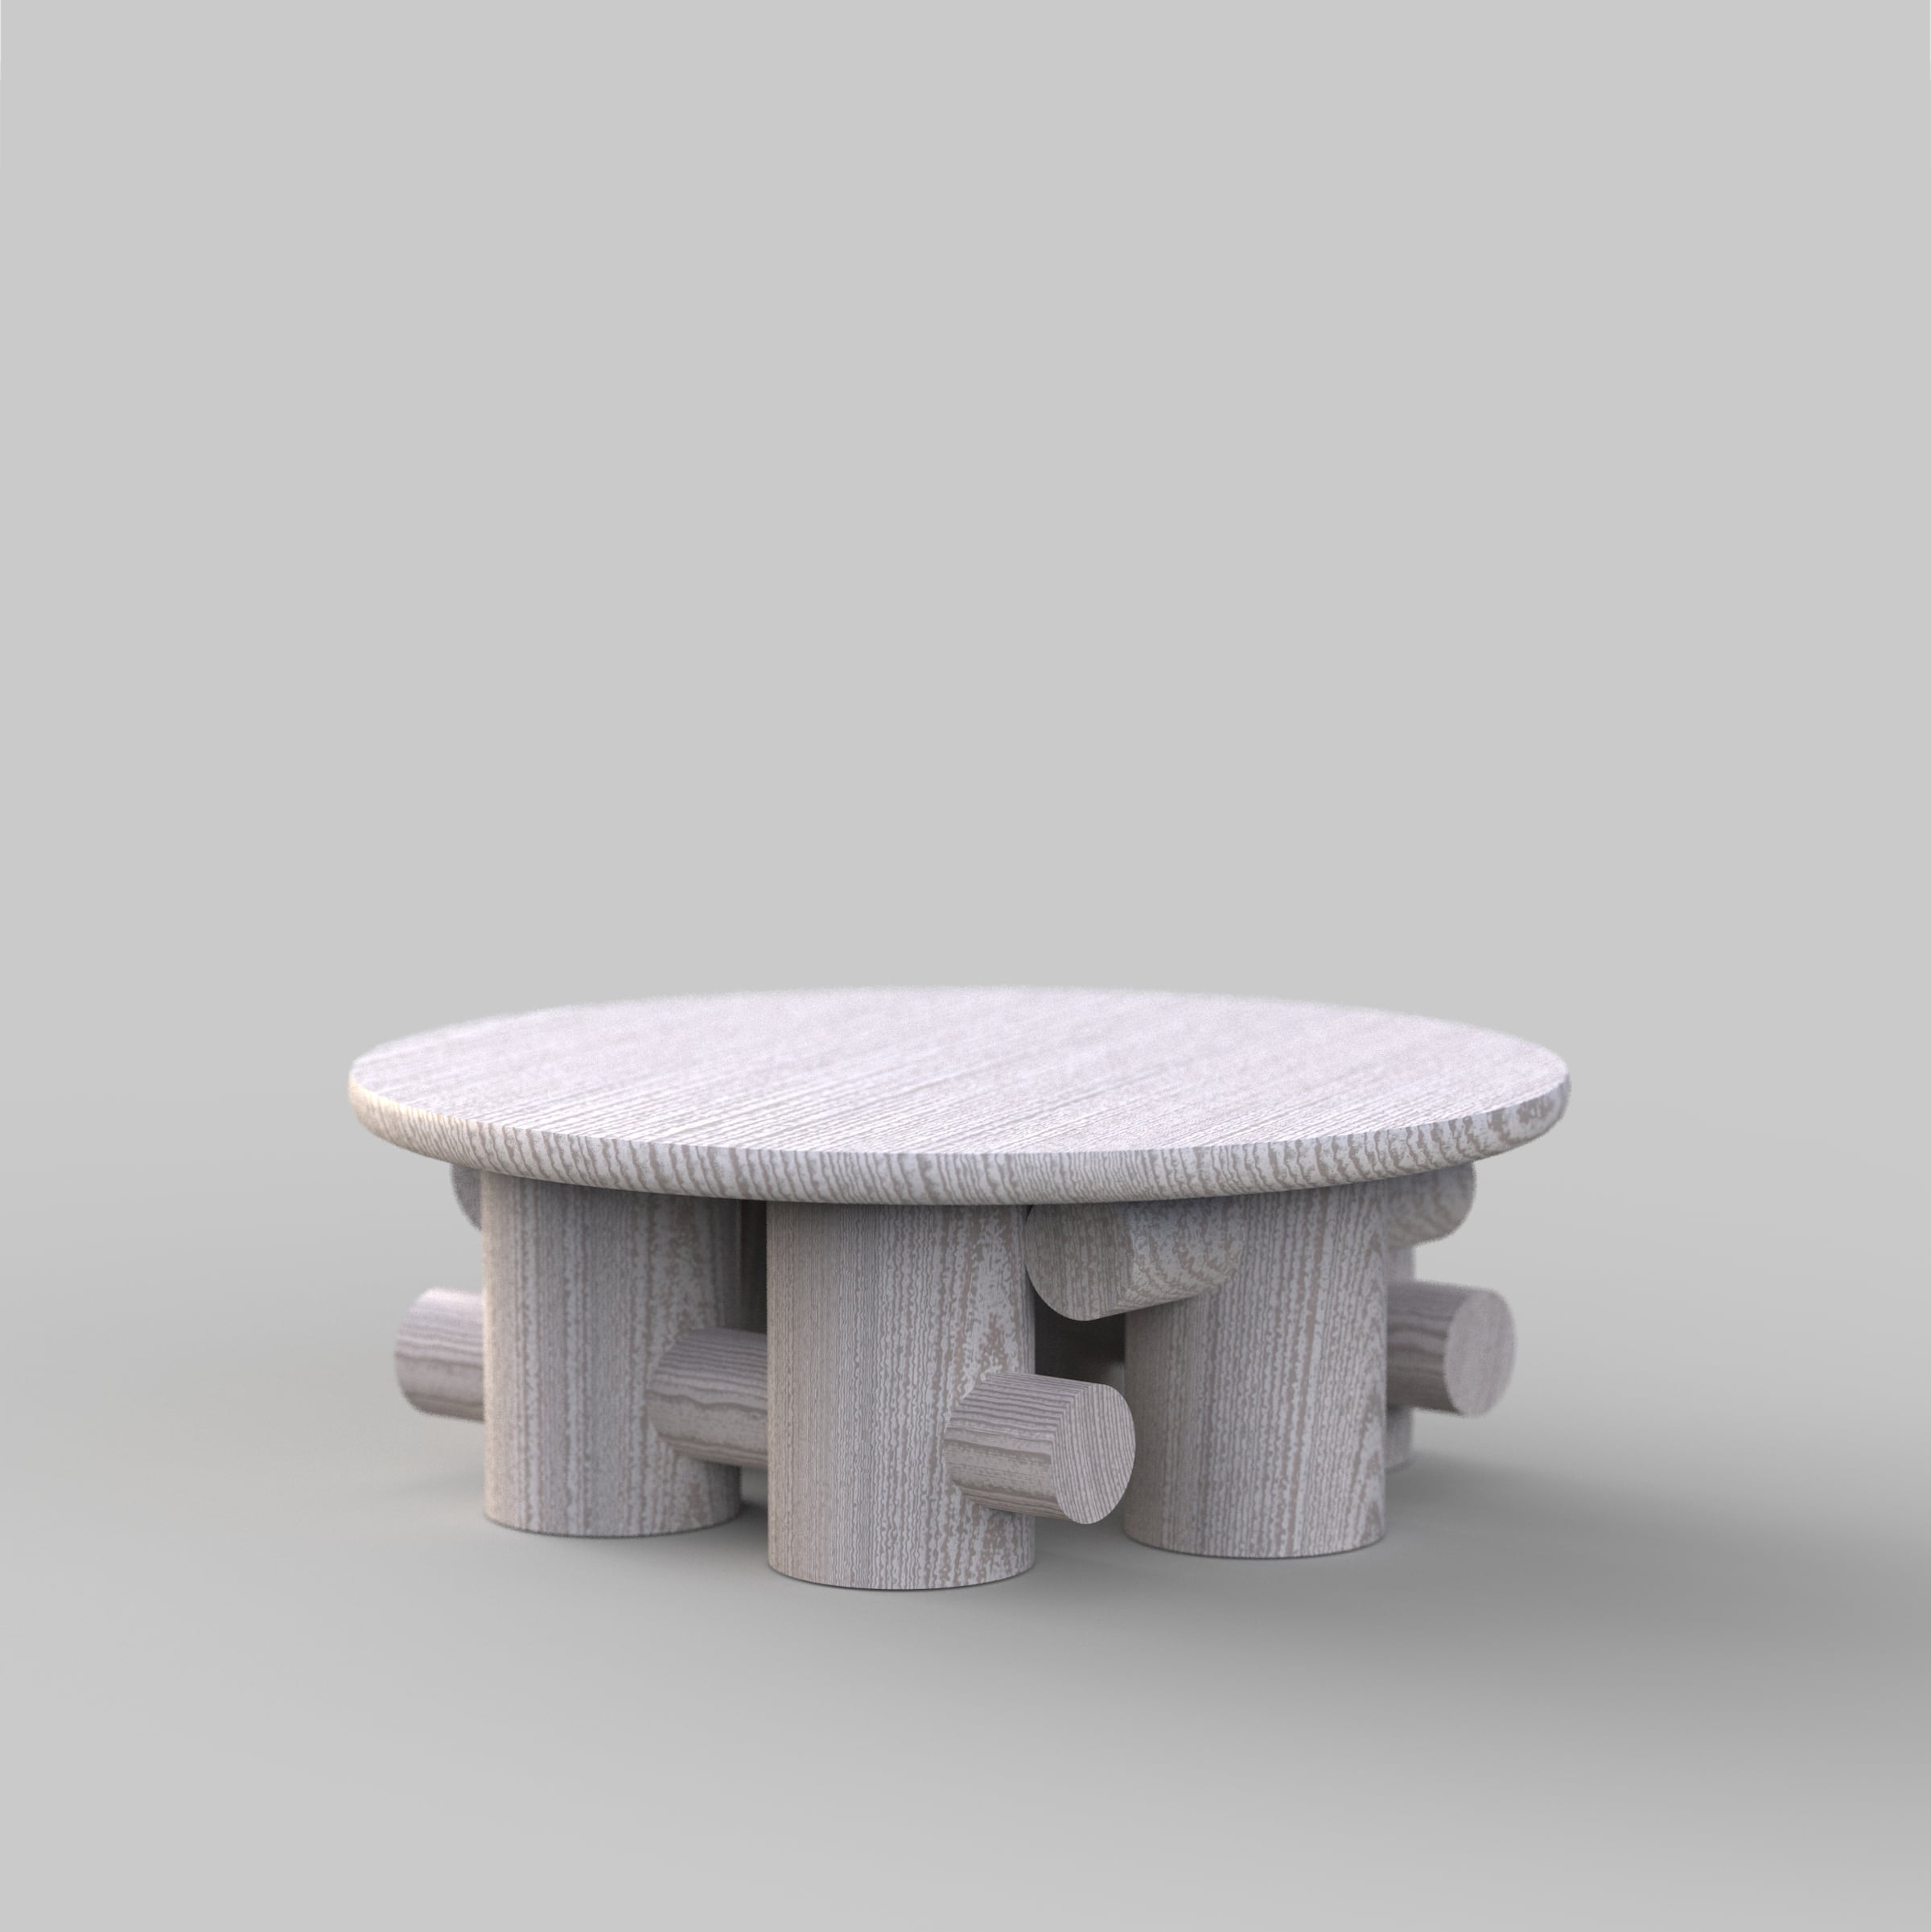 Log-low-table-coffee-table-wooden-table-furniture-design-nizky-stul-konferencni-stolek-drevenny-stul-designed-by-jiri-krejcirik-002